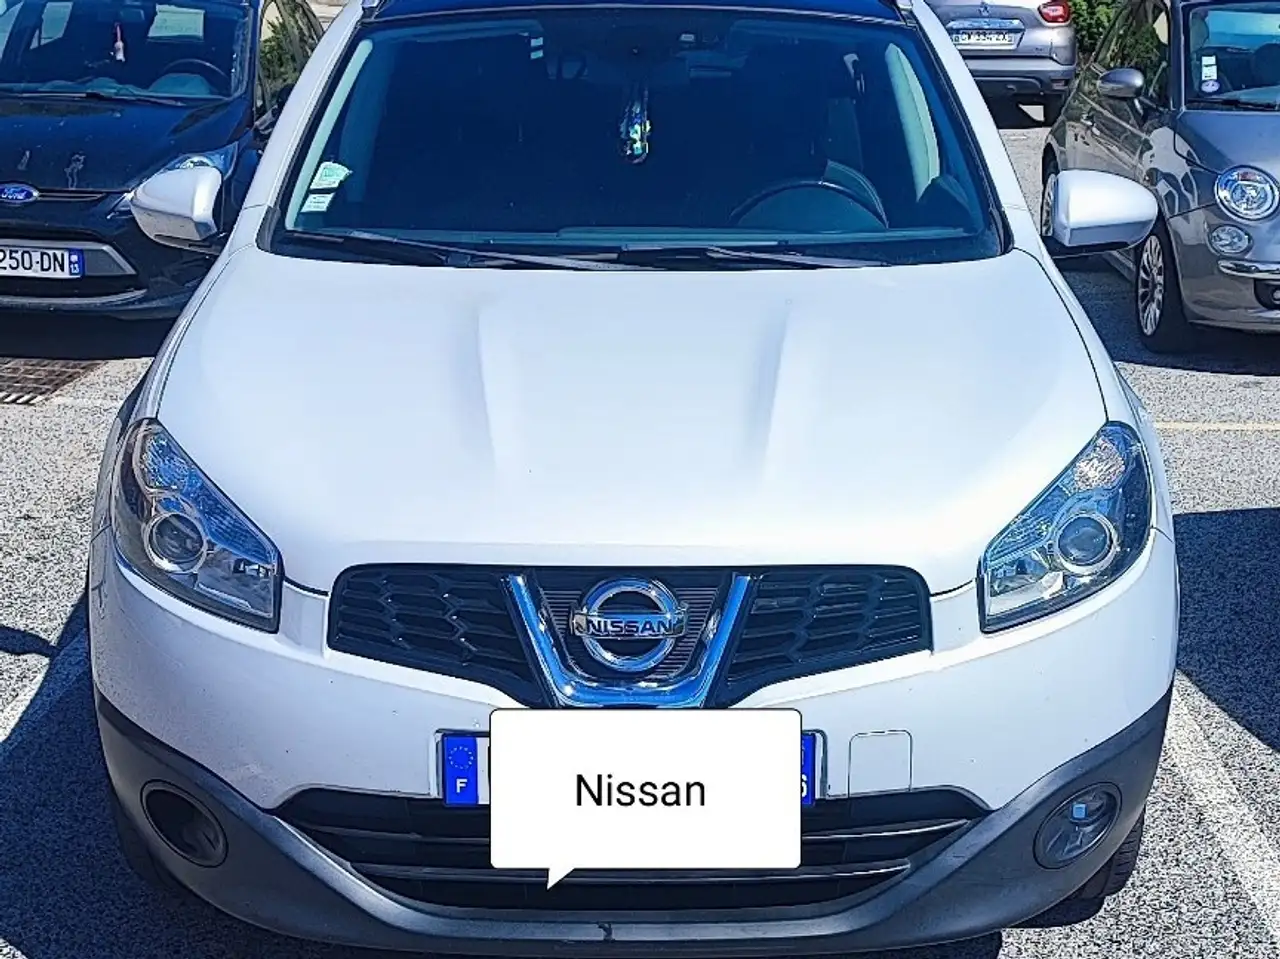 Nissan Qashqai 1.5 dCi 110 FAP VISIA